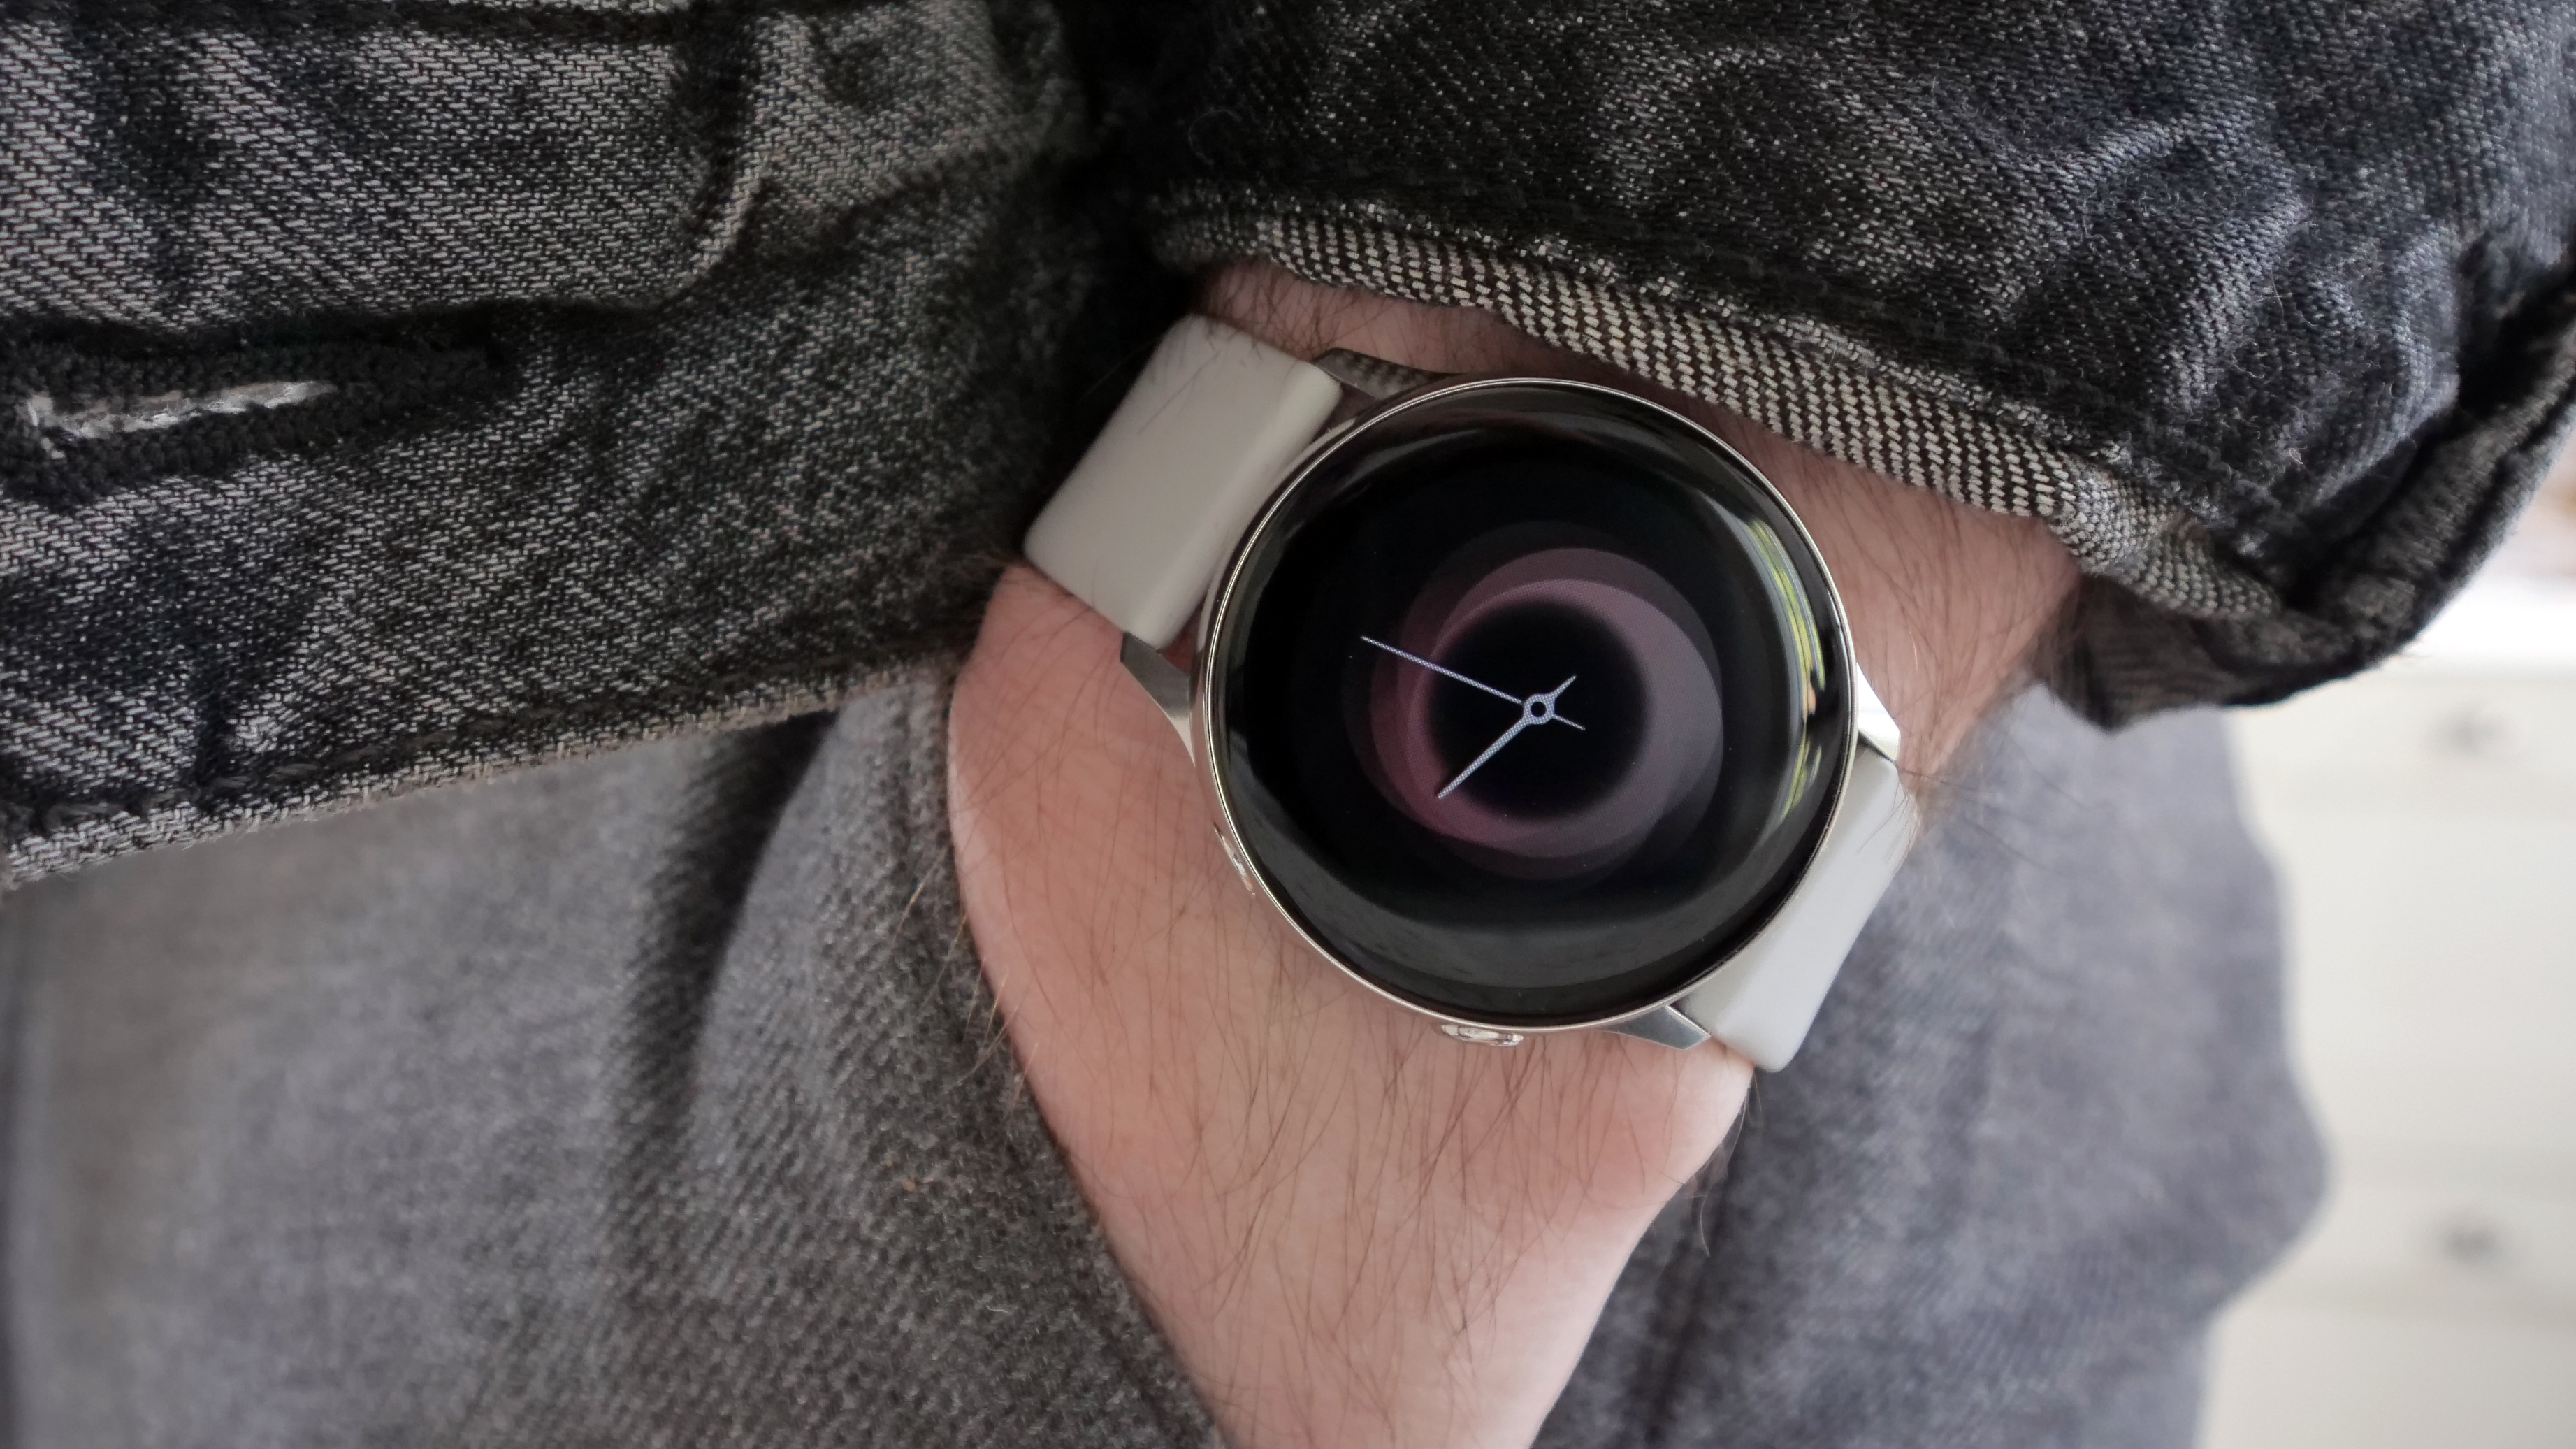 Samsung Galaxy Watch Active 2 Hands On! 